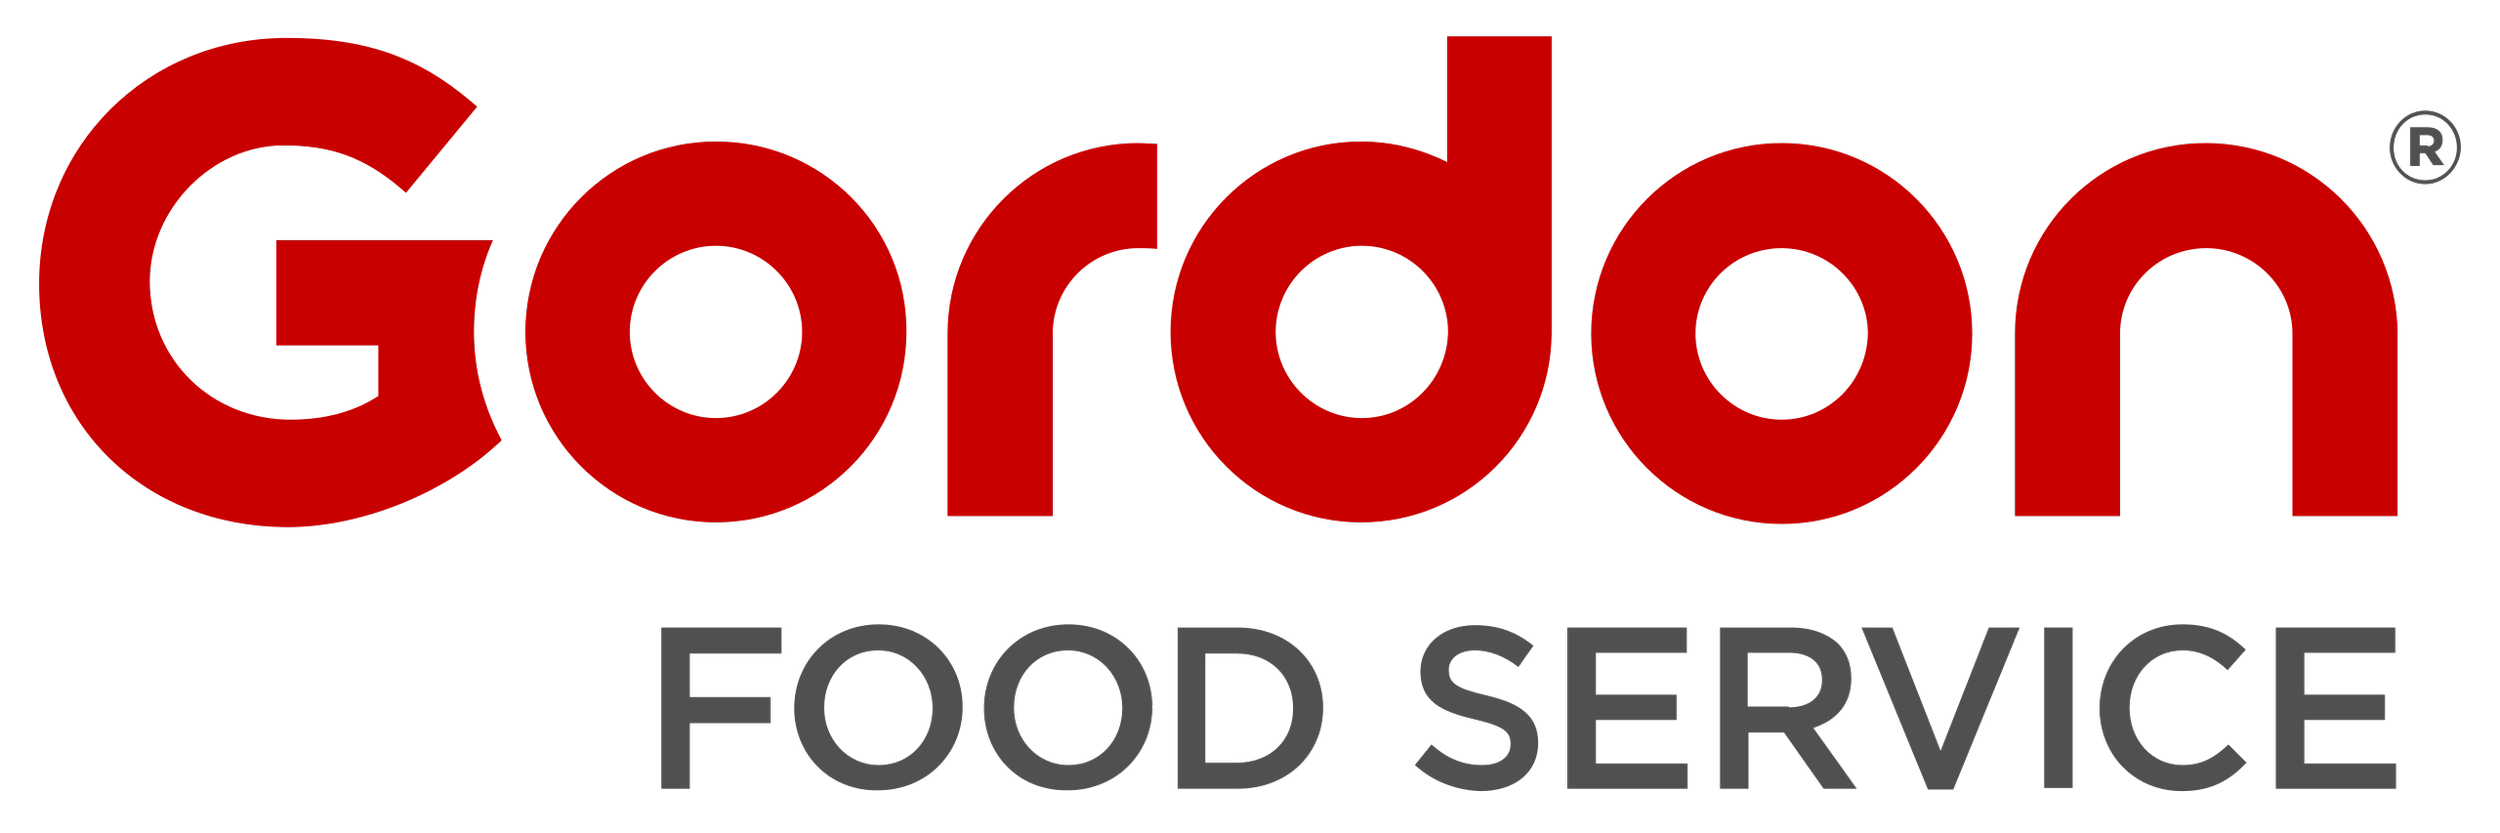 2560px-Gordon_Food_Service_logo.svg.png